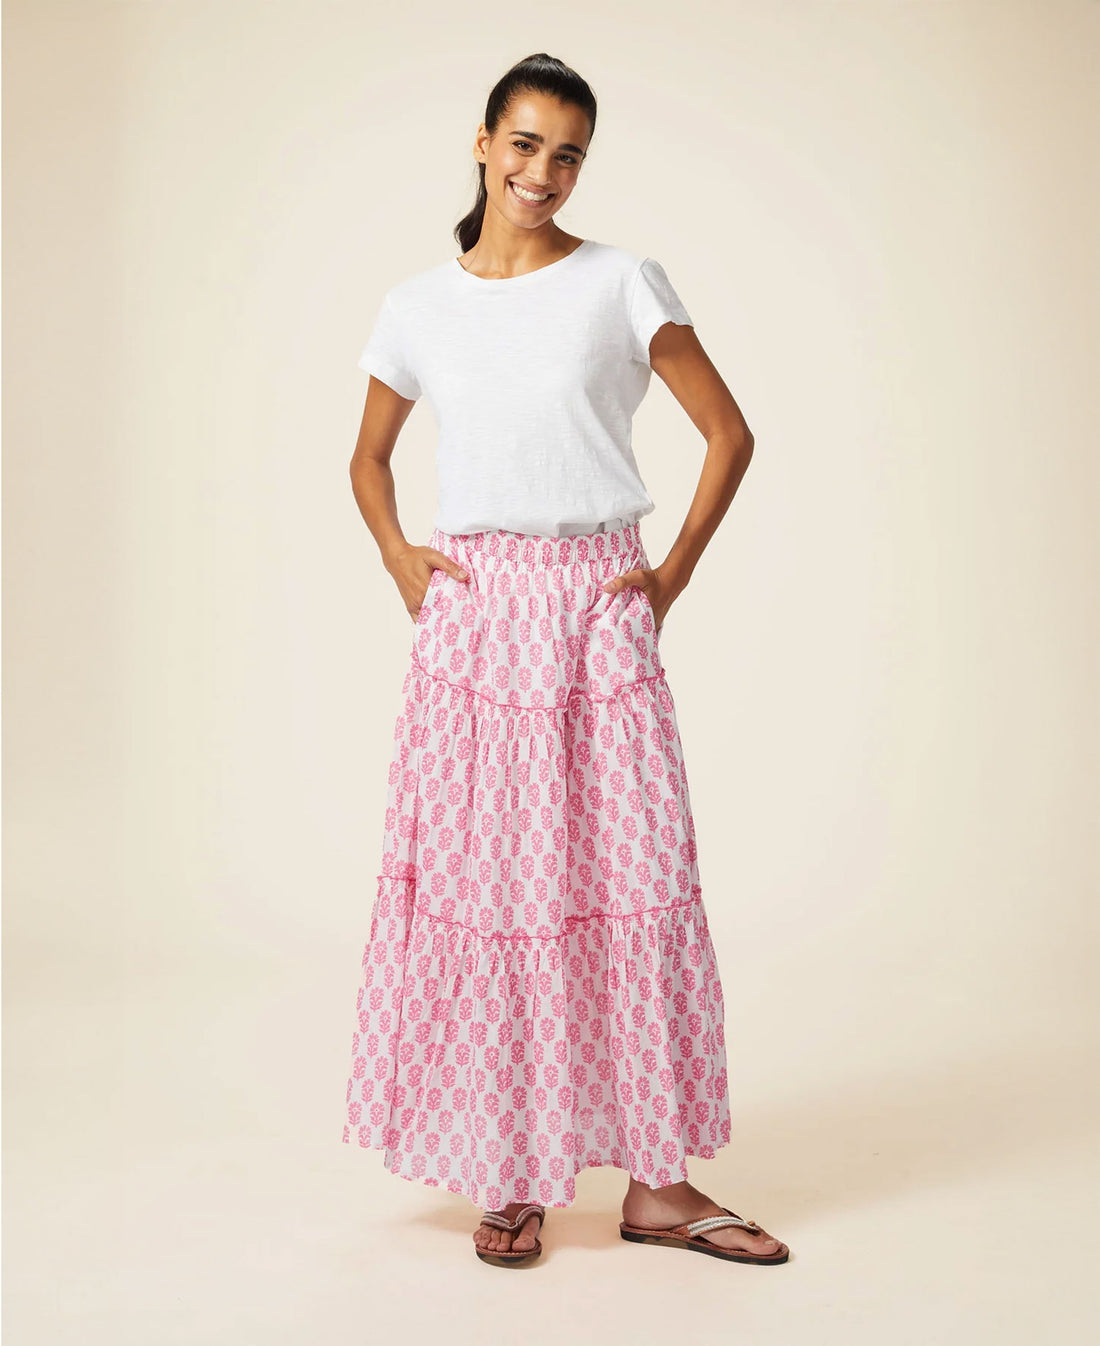 Bea Skirt - White/Pink